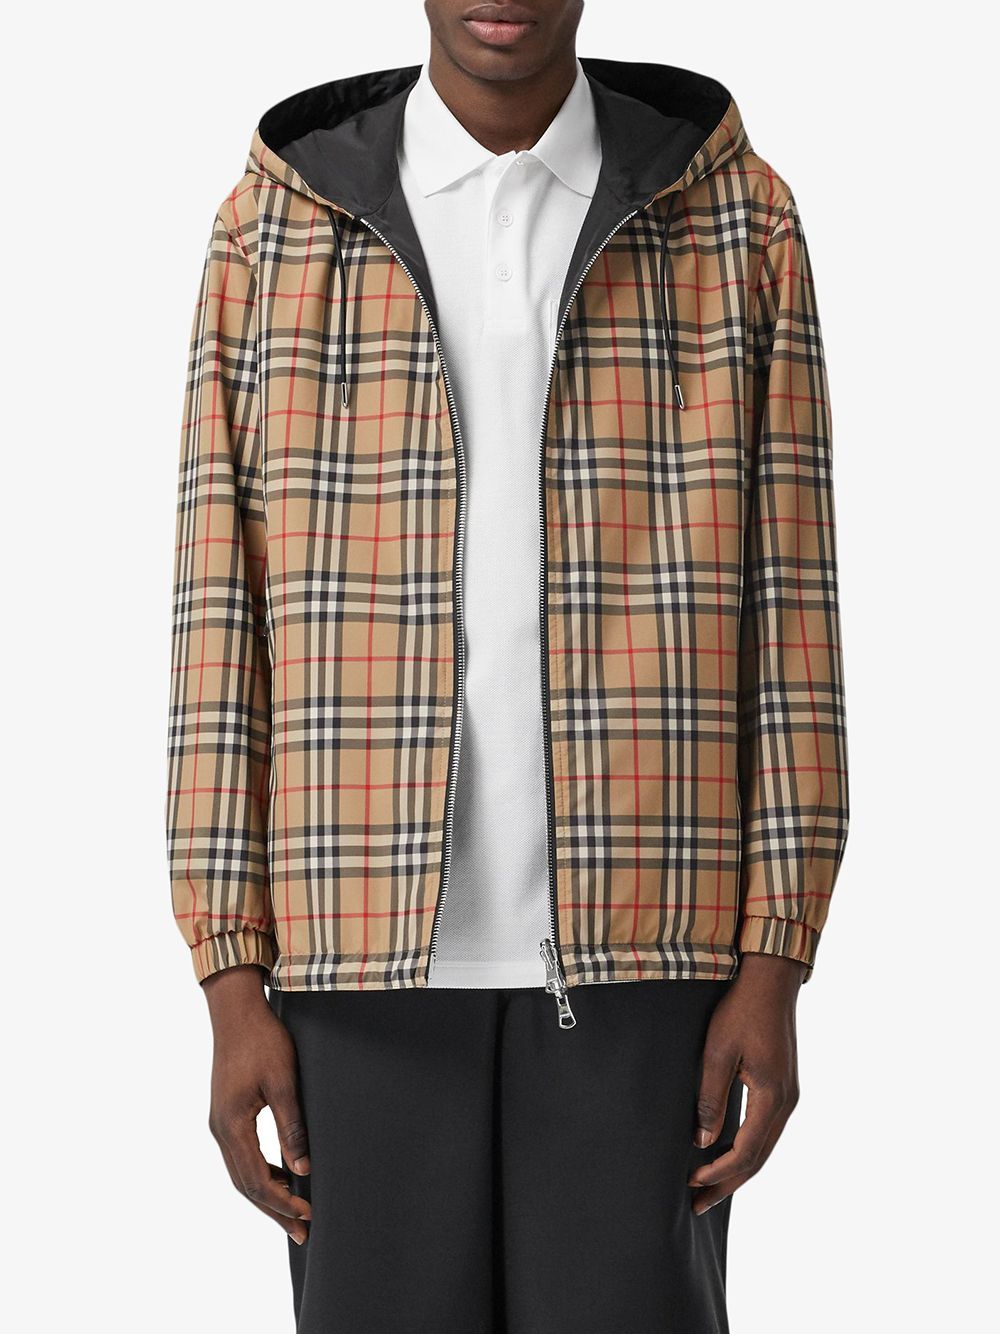 BURBERRY Reversible Vintage Check Jacket for Men